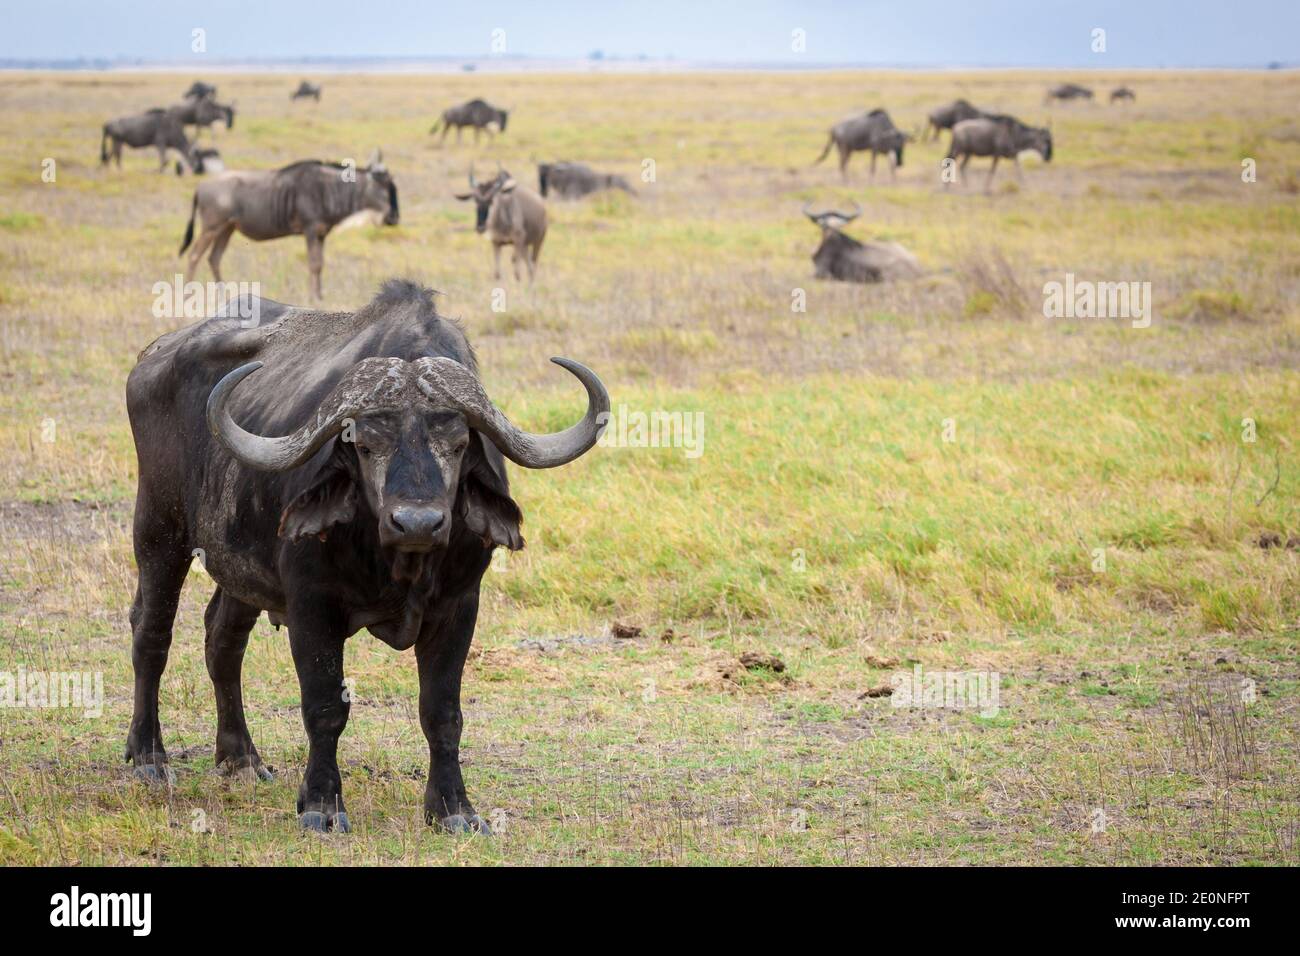 Buffalo standing in the savannah of Kenya. Stock Photo